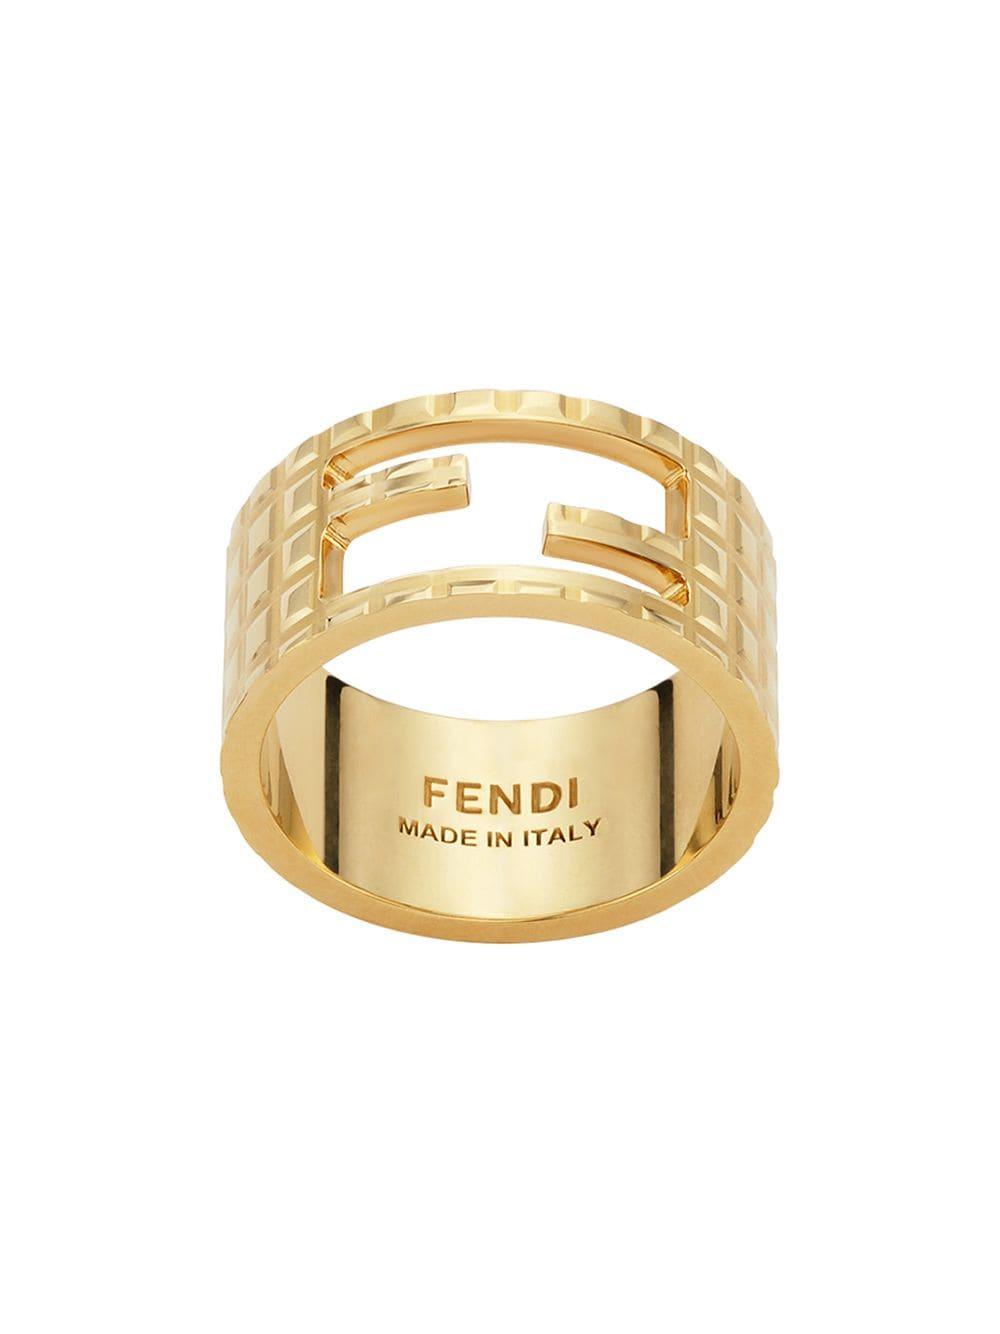 Fendi Baguette Ring in Gold (Metallic) - Lyst